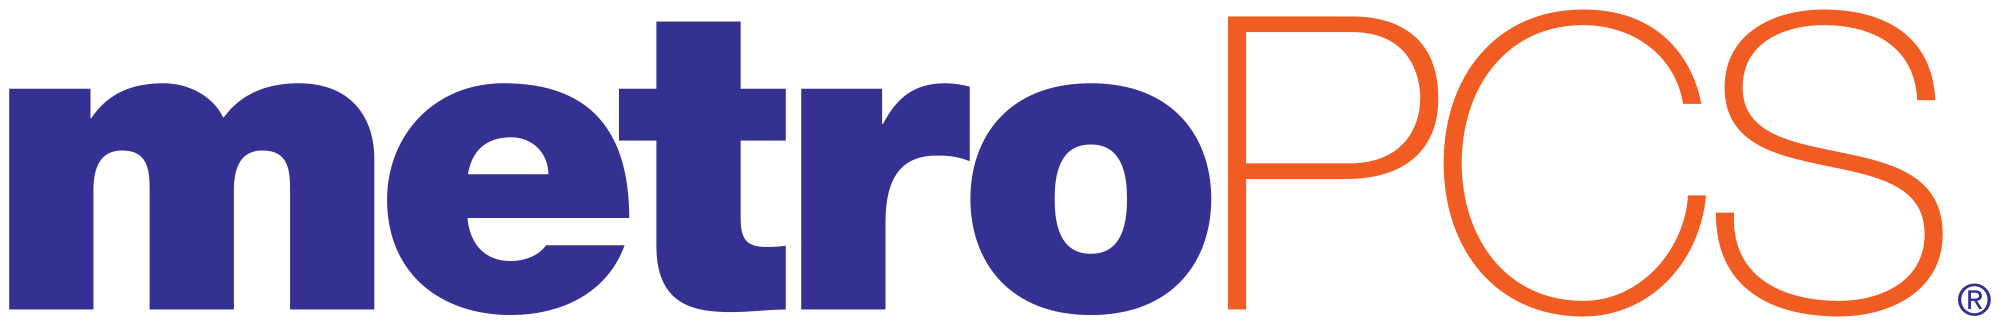 MetroPCS_logo.svg